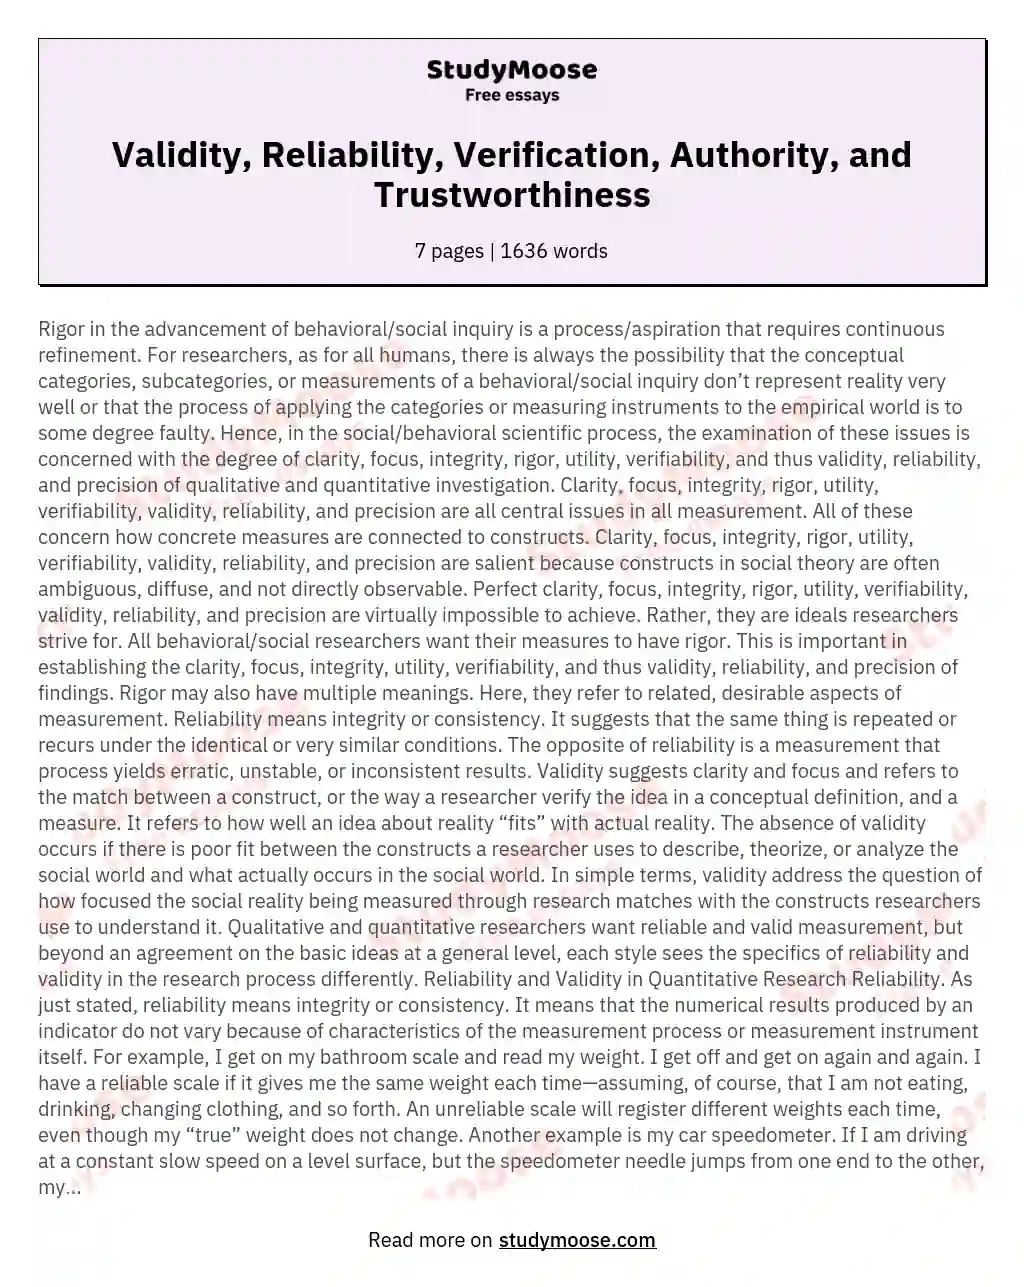 Validity, Reliability, Verification, Authority, and Trustworthiness